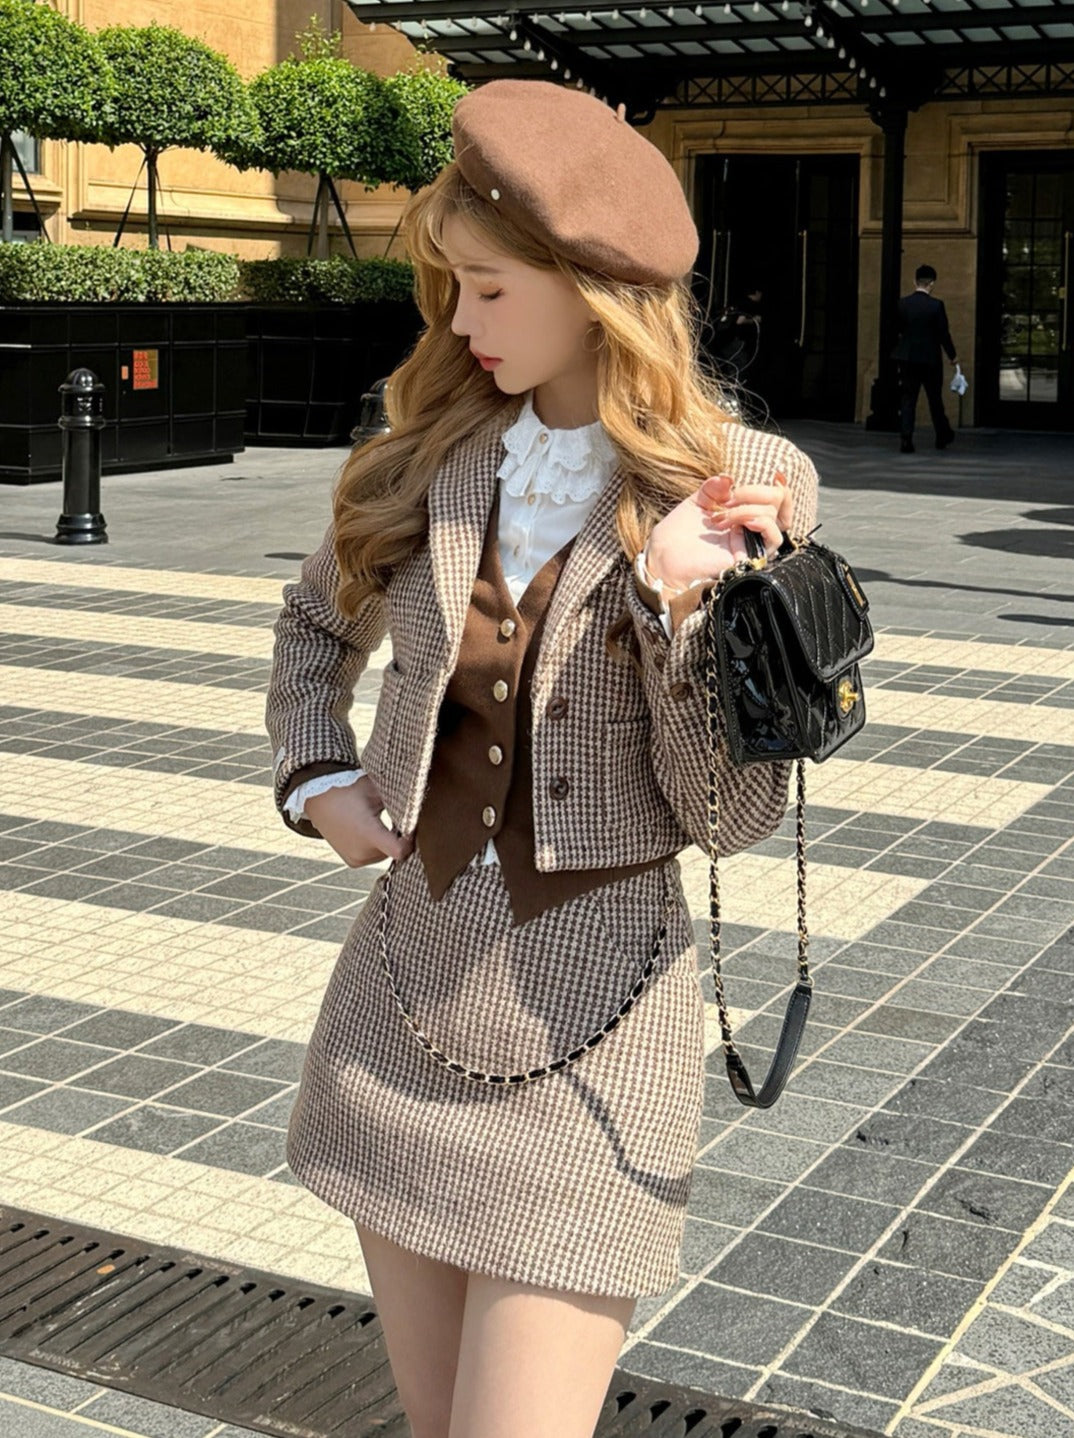 Chidori lattice retro brown wool jacket + best + skirt